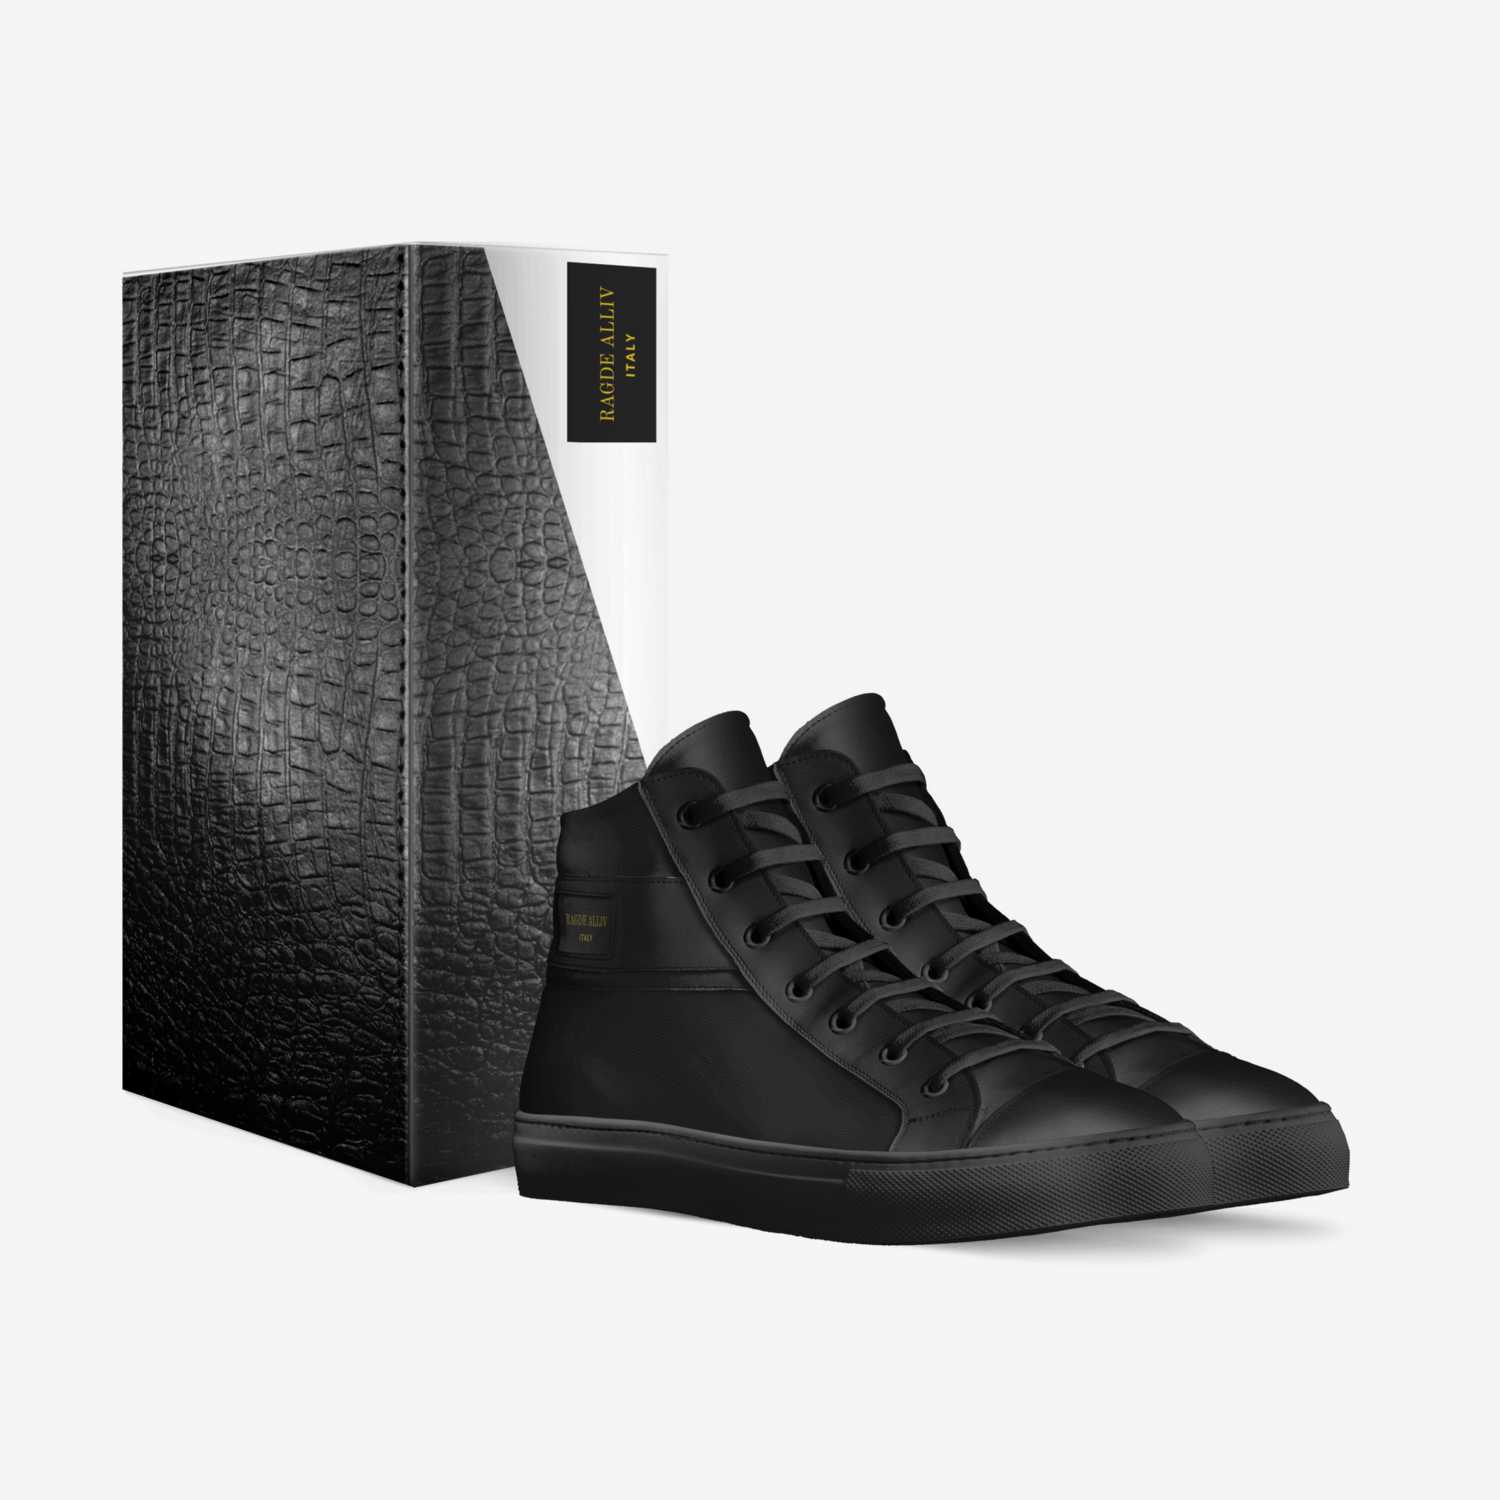 RAGDE ALLIV custom made in Italy shoes by Edgar Villa | Box view